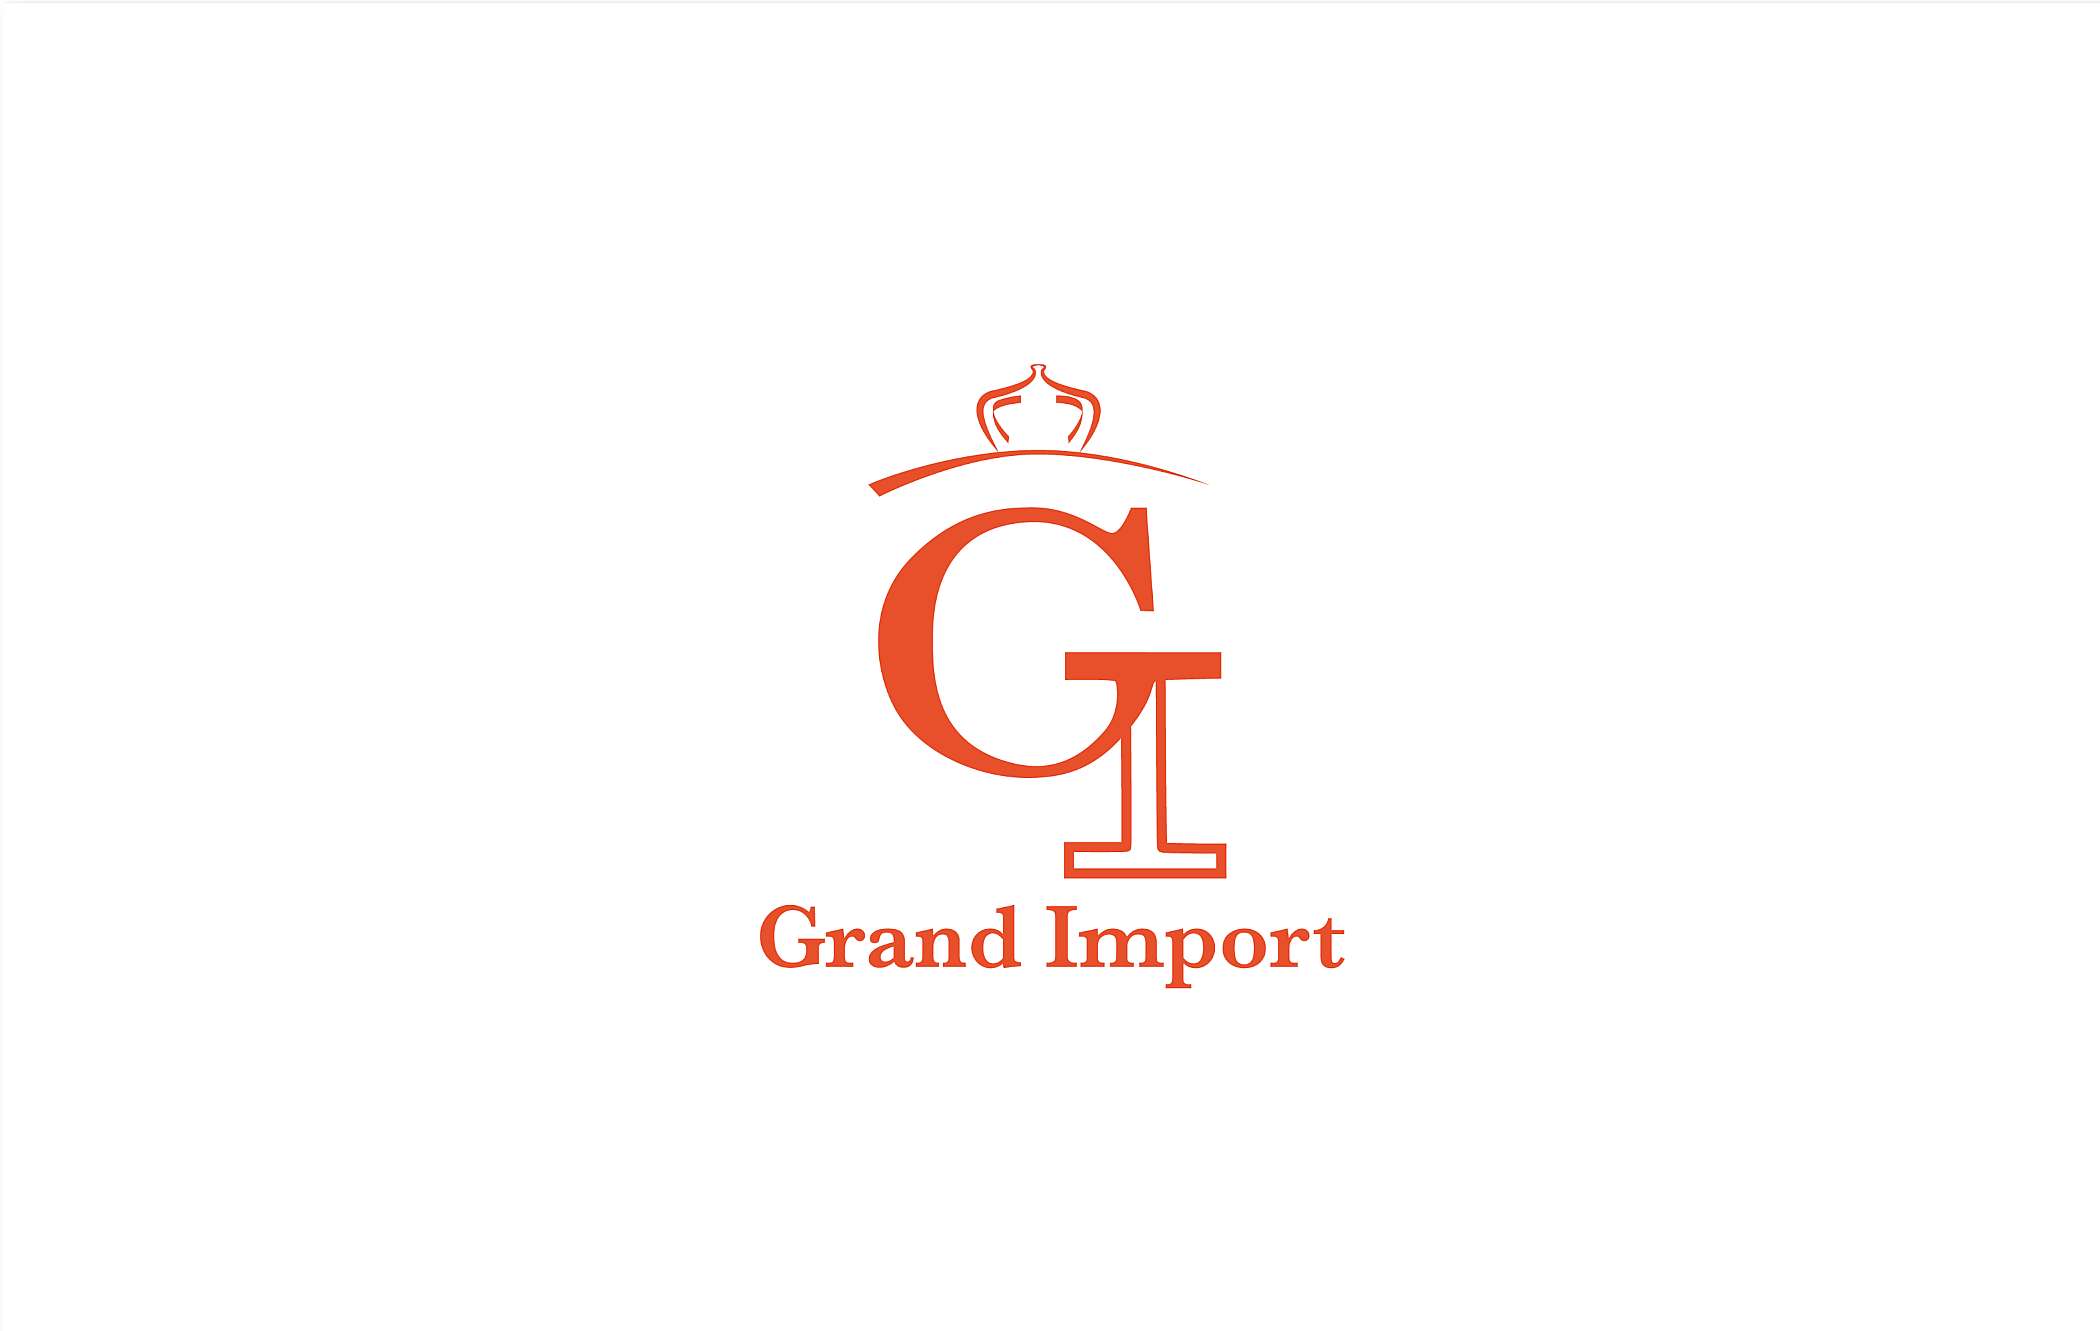 Grand Import